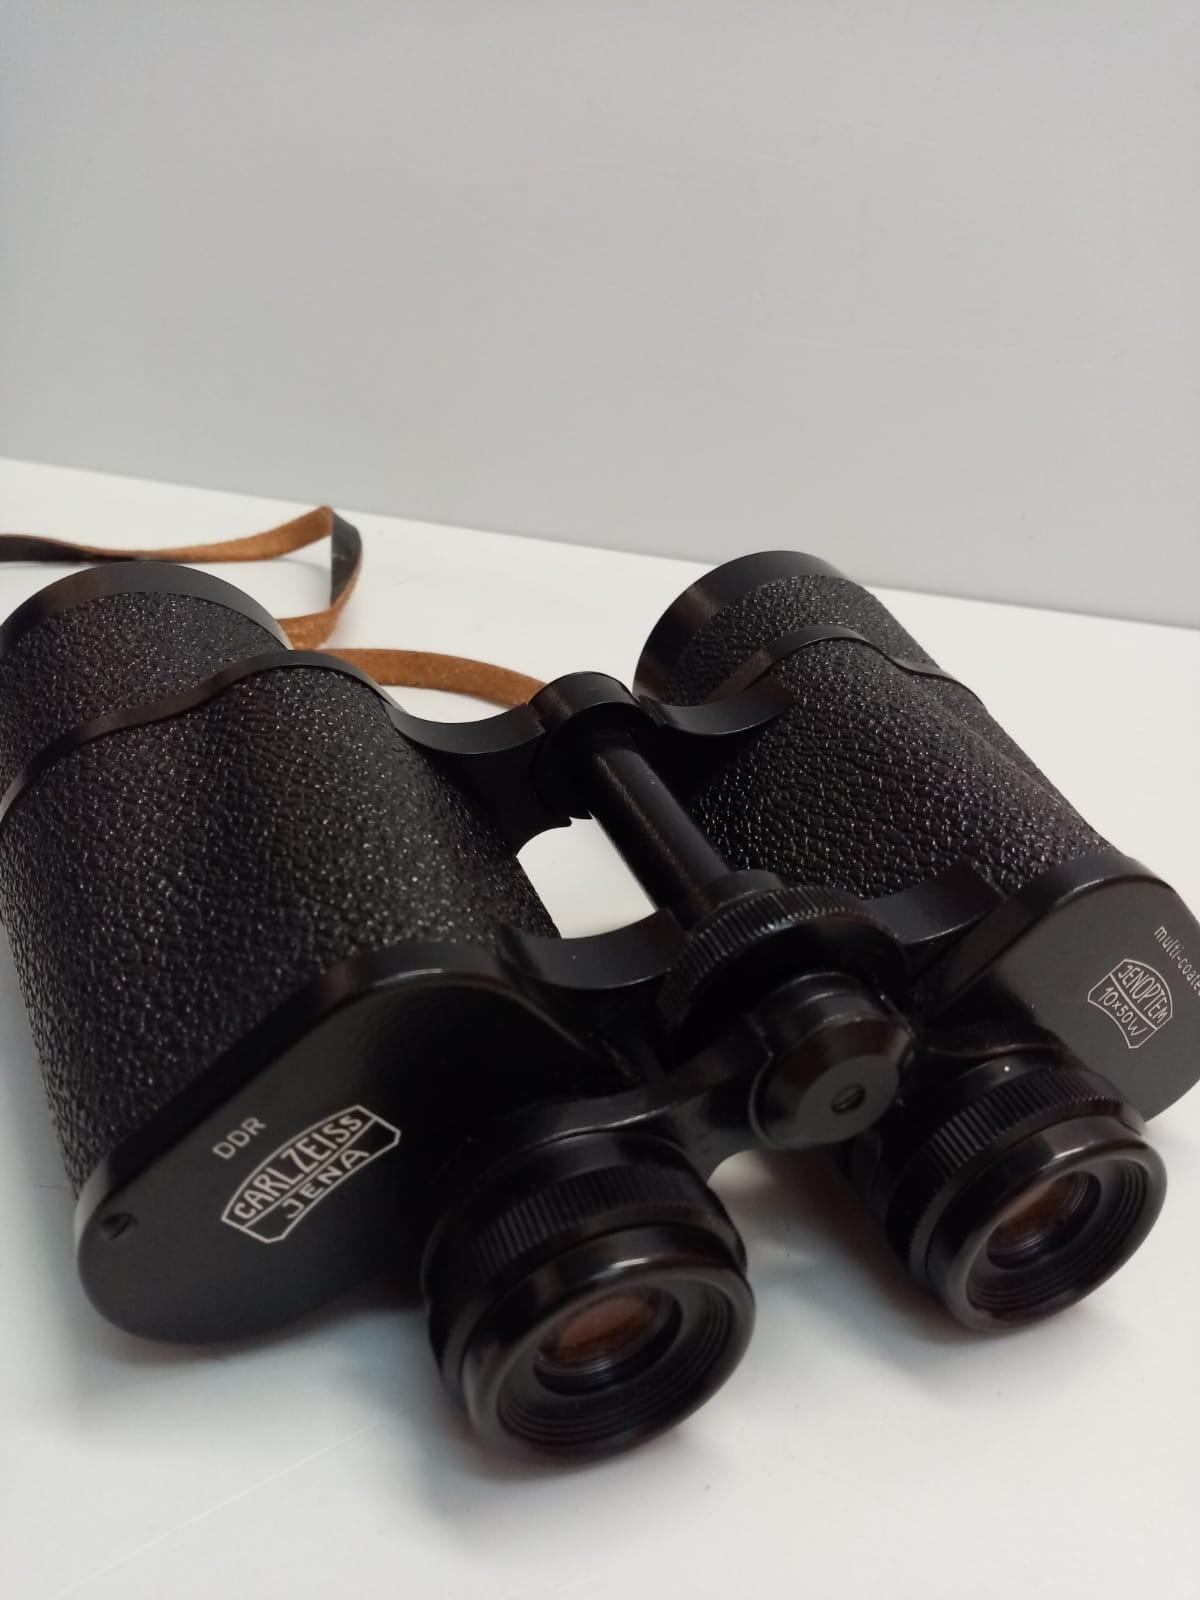 Large Carl Zeiss Jena Binoculars in Leather Carrying Case, 10 x 50w. - Bild 5 aus 8